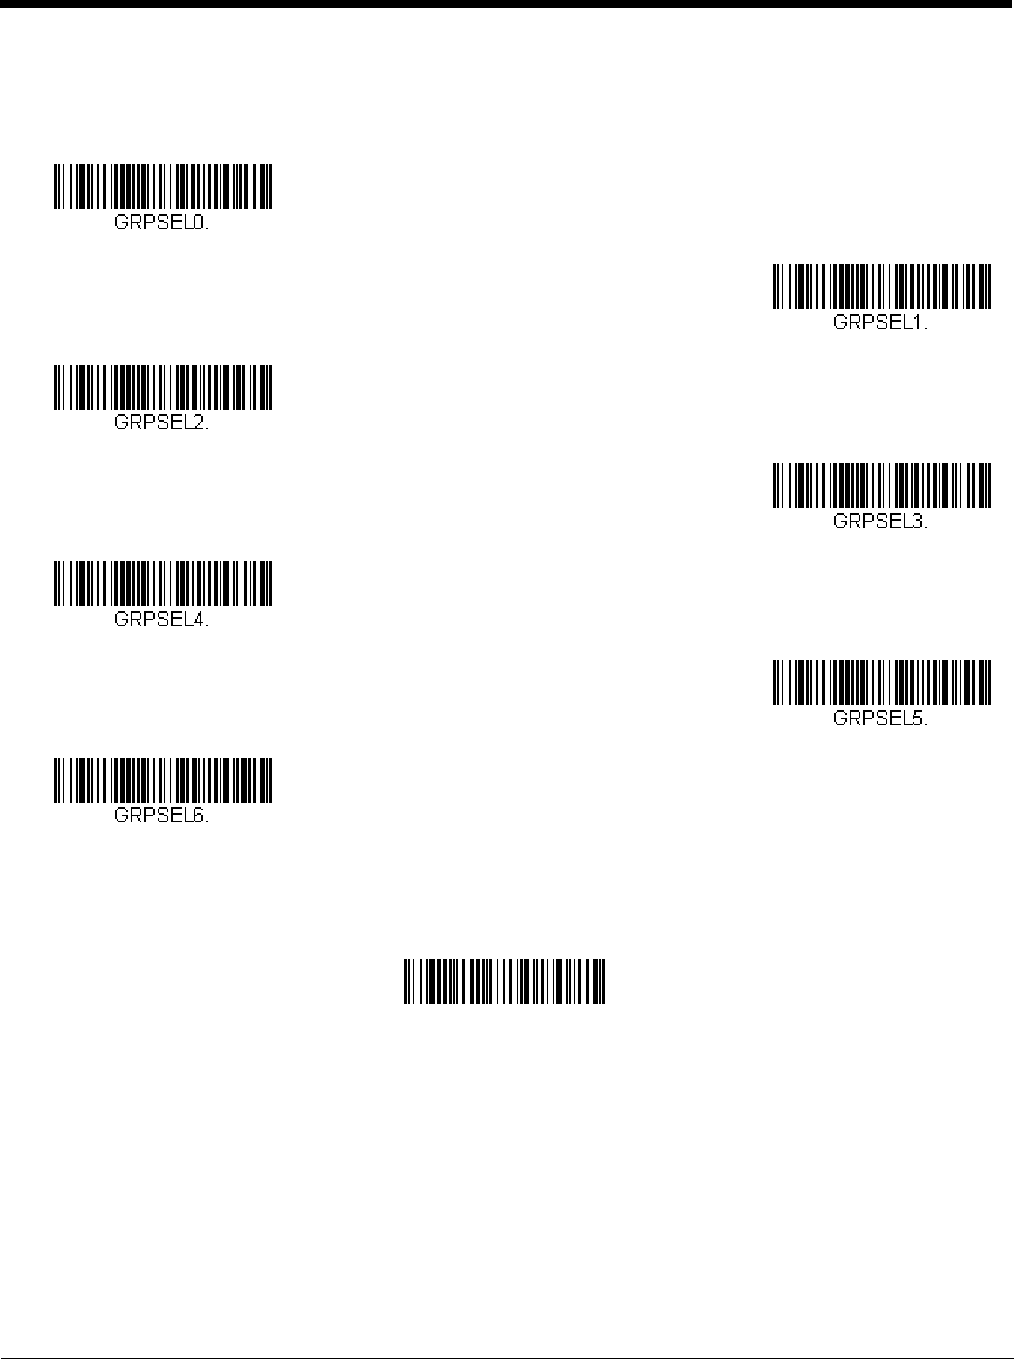 Honeywell 1981A Barcode Scanner User Manual 14C0587R 1981i 1 2015 02 10